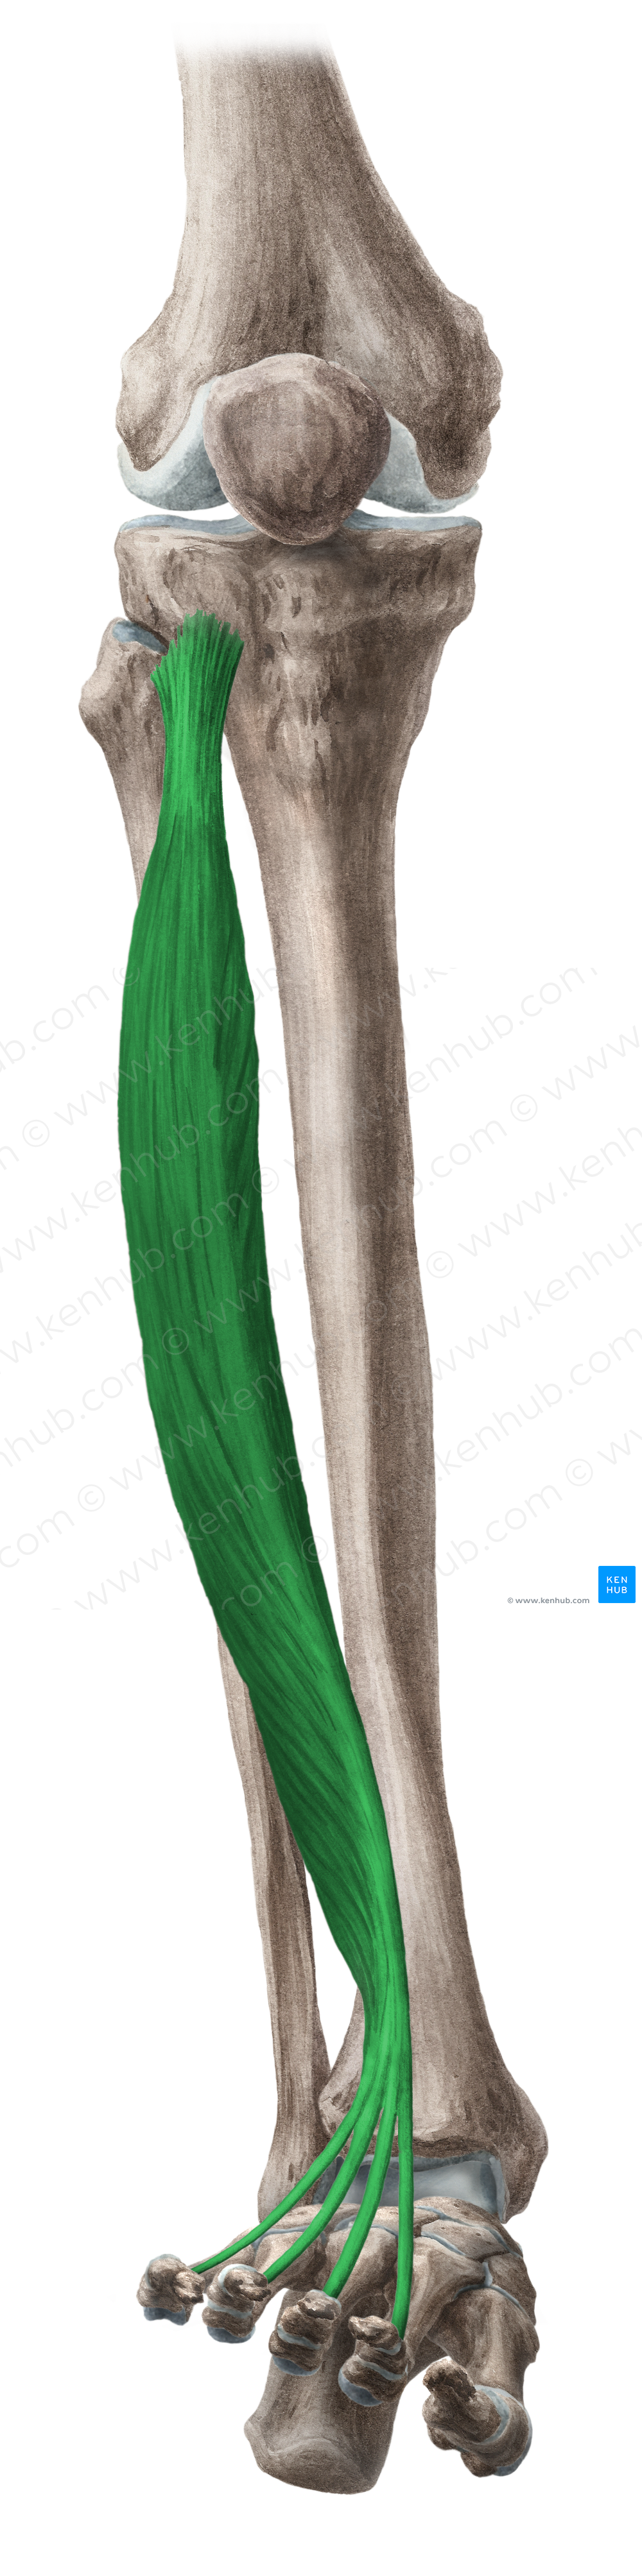 Extensor digitorum longus muscle (#5330)